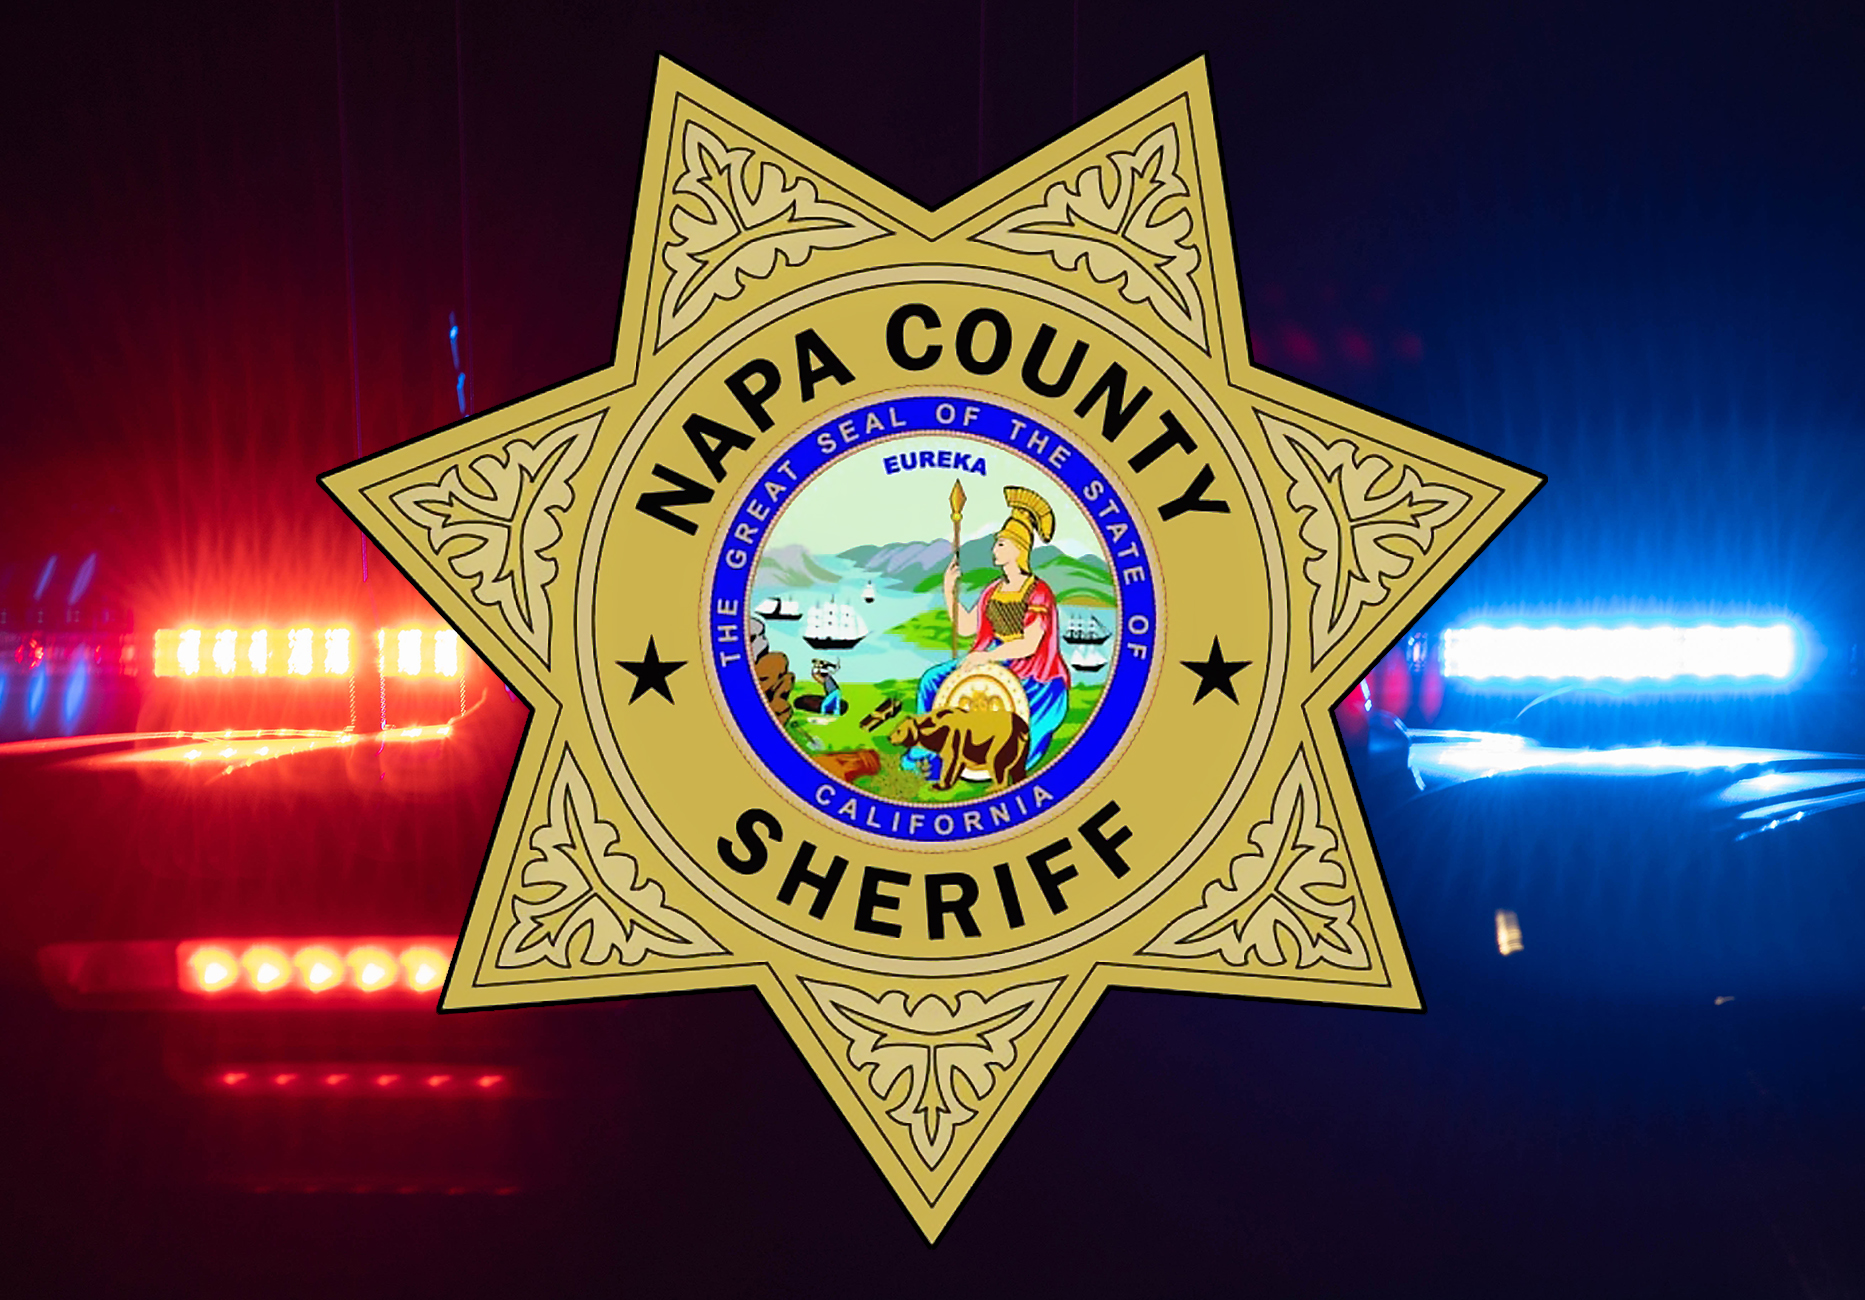 Napa County Sheriff's Department